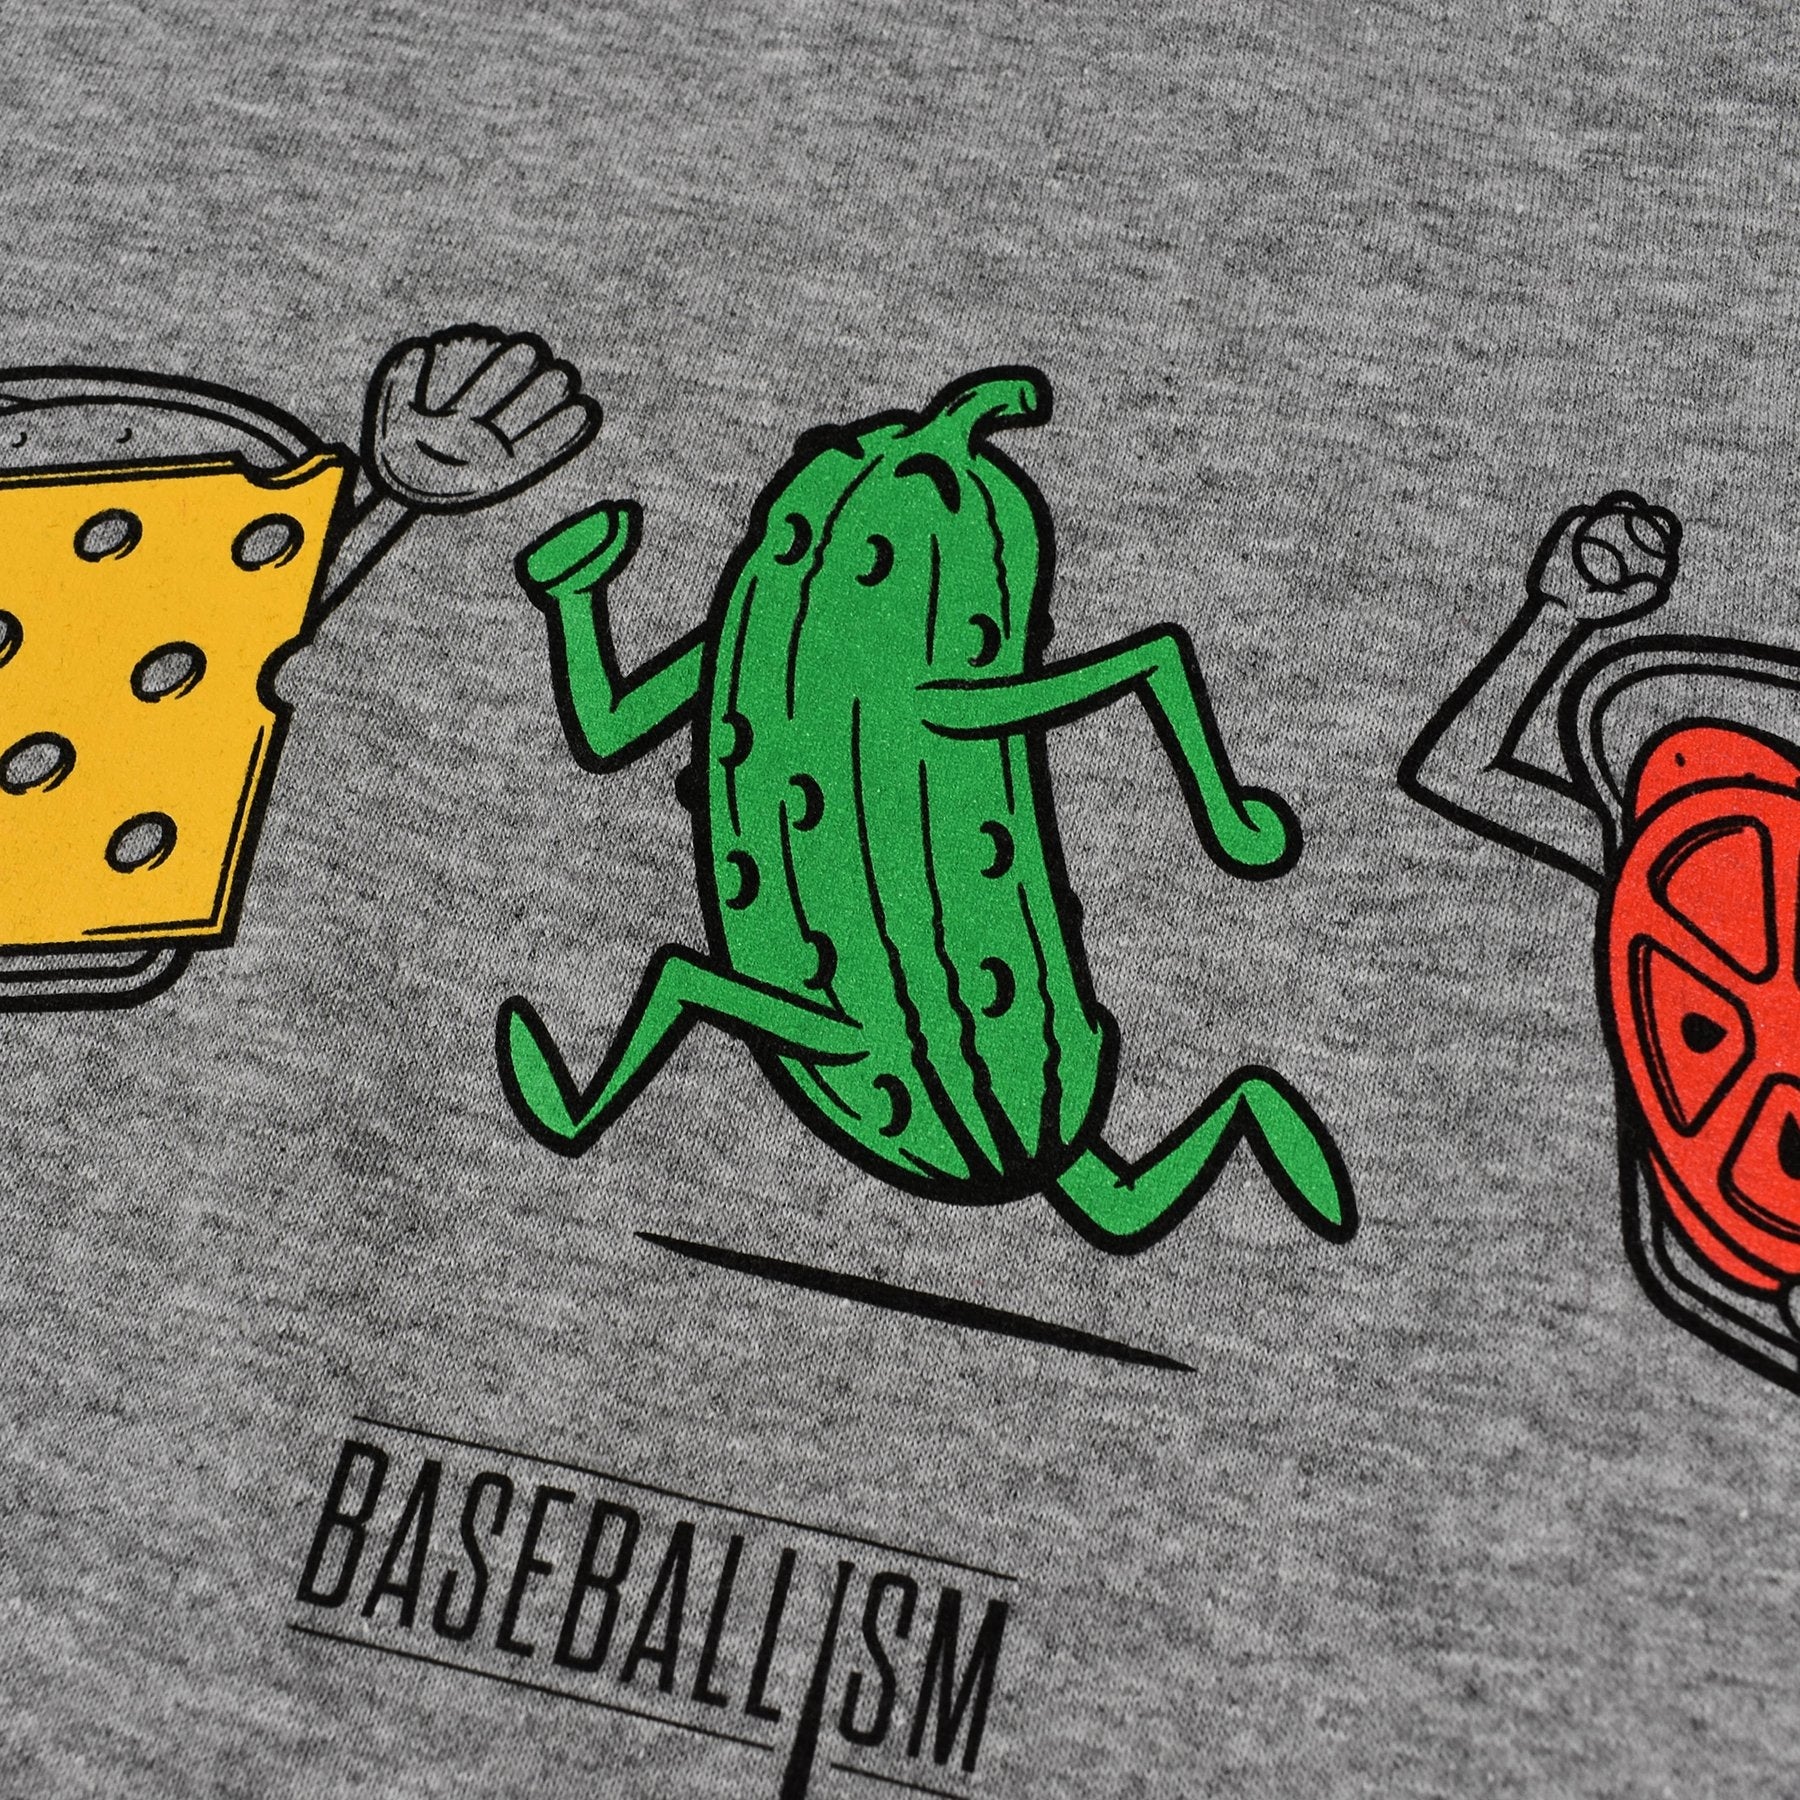 Baseballism The Pickle Youth T-Shirt